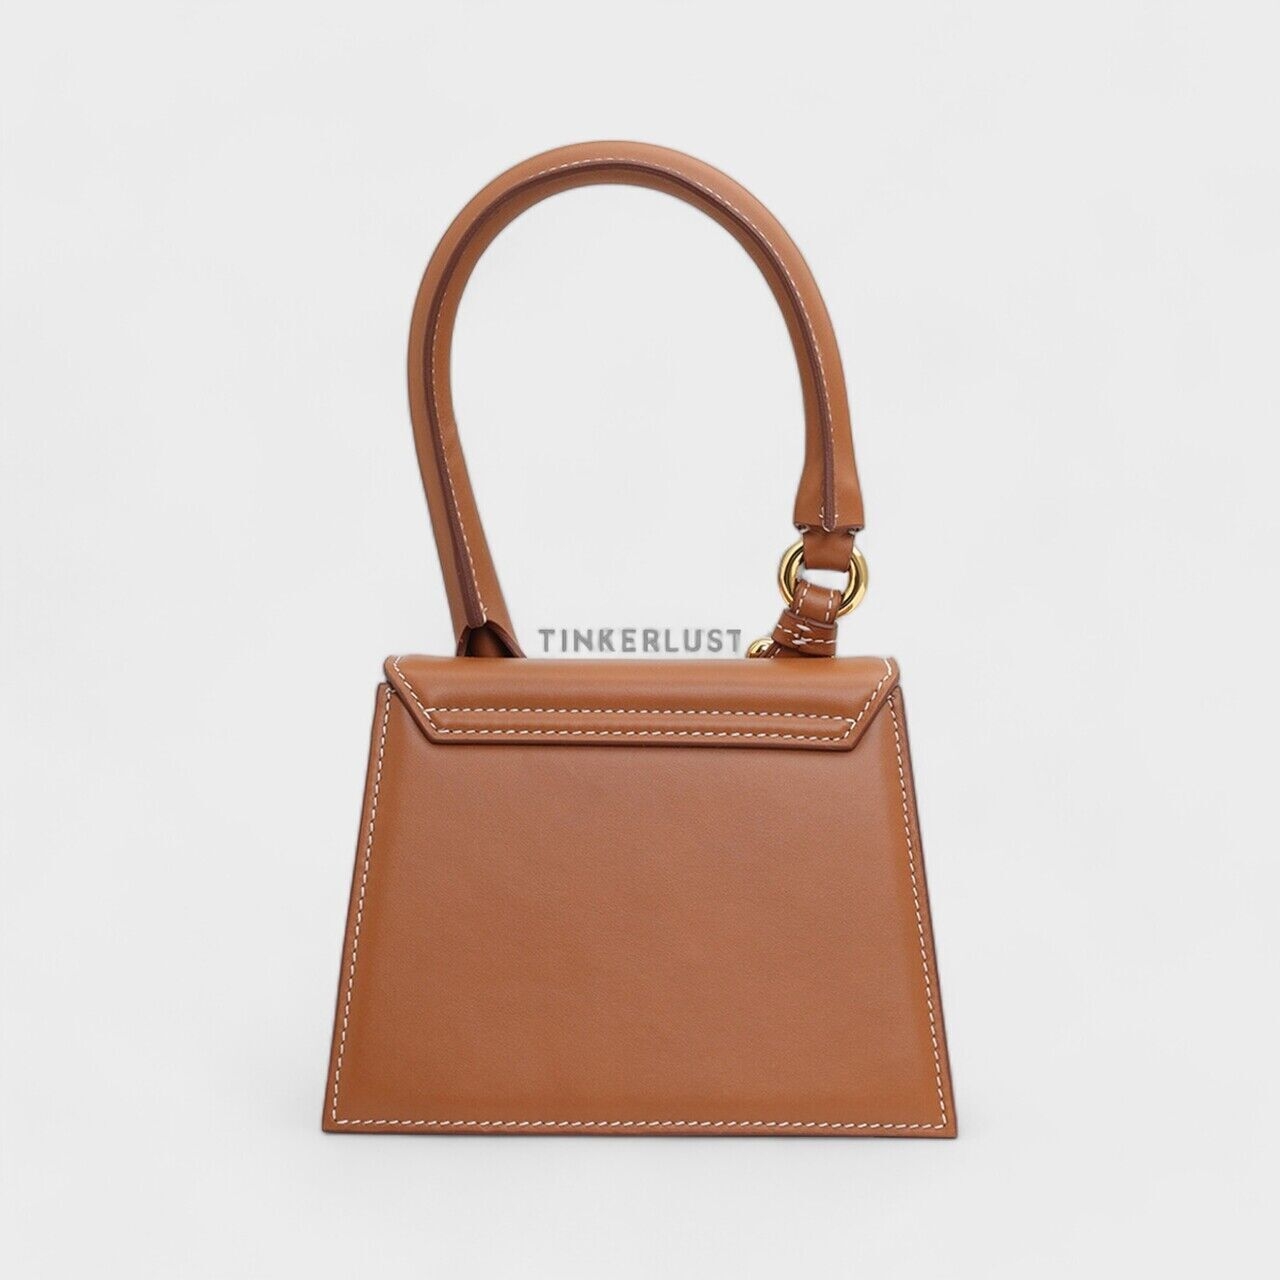 Jacquemus LE Chiquito Moyen Boucle Handbag in Light Brown Satchel Bag